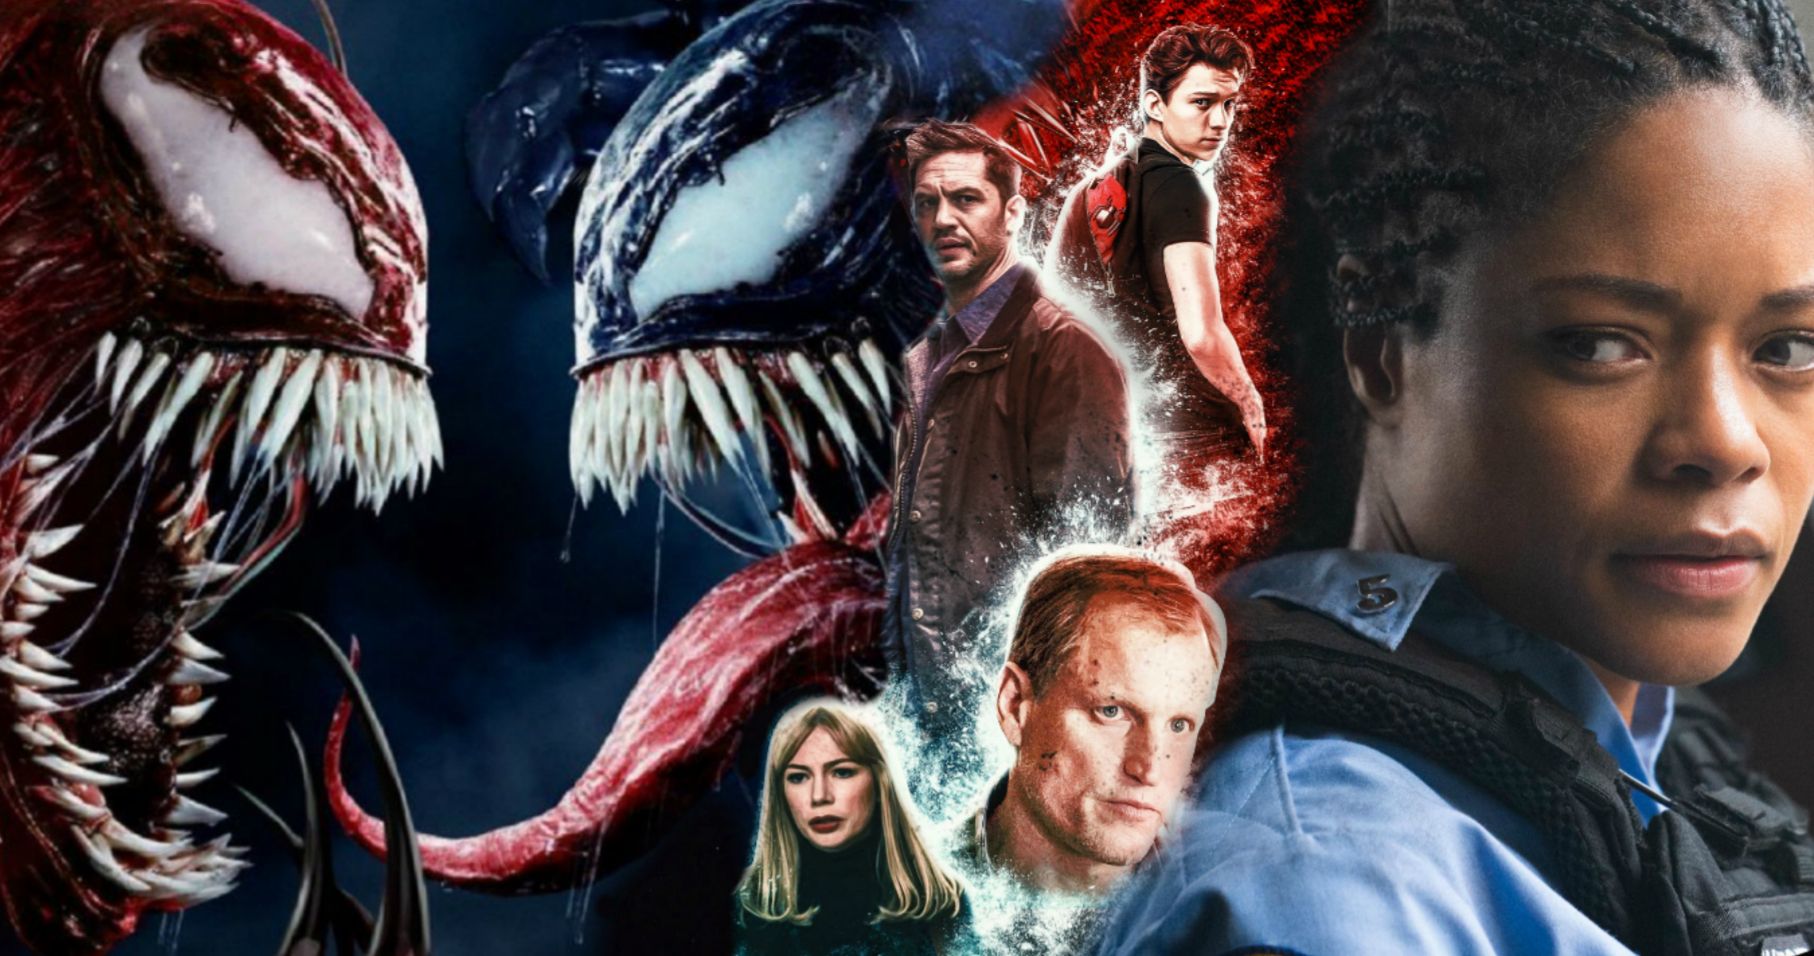 Rumored Venom 2 Details Tease a Dark Tone, Shriek and Lots of Carnage